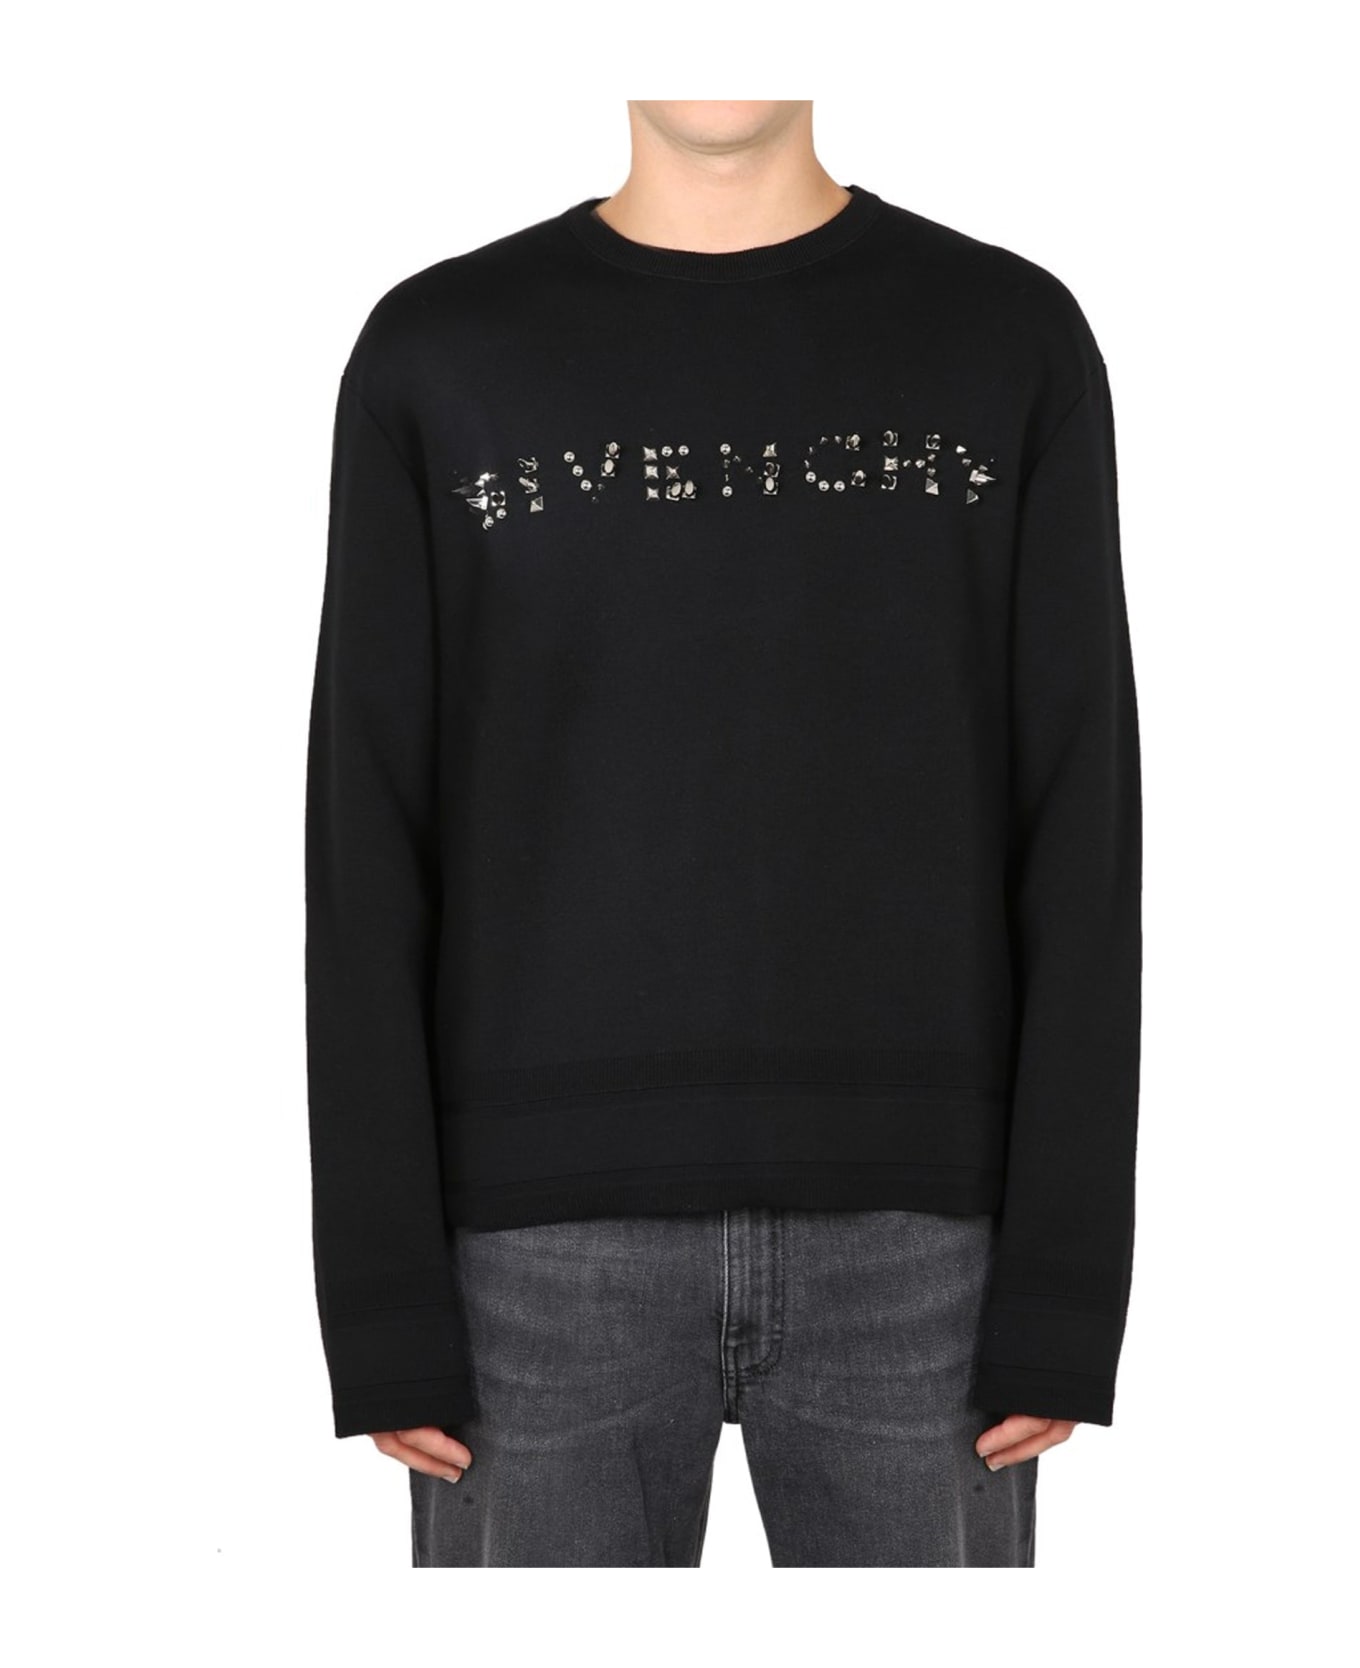 Givenchy Logo Sweater - Black